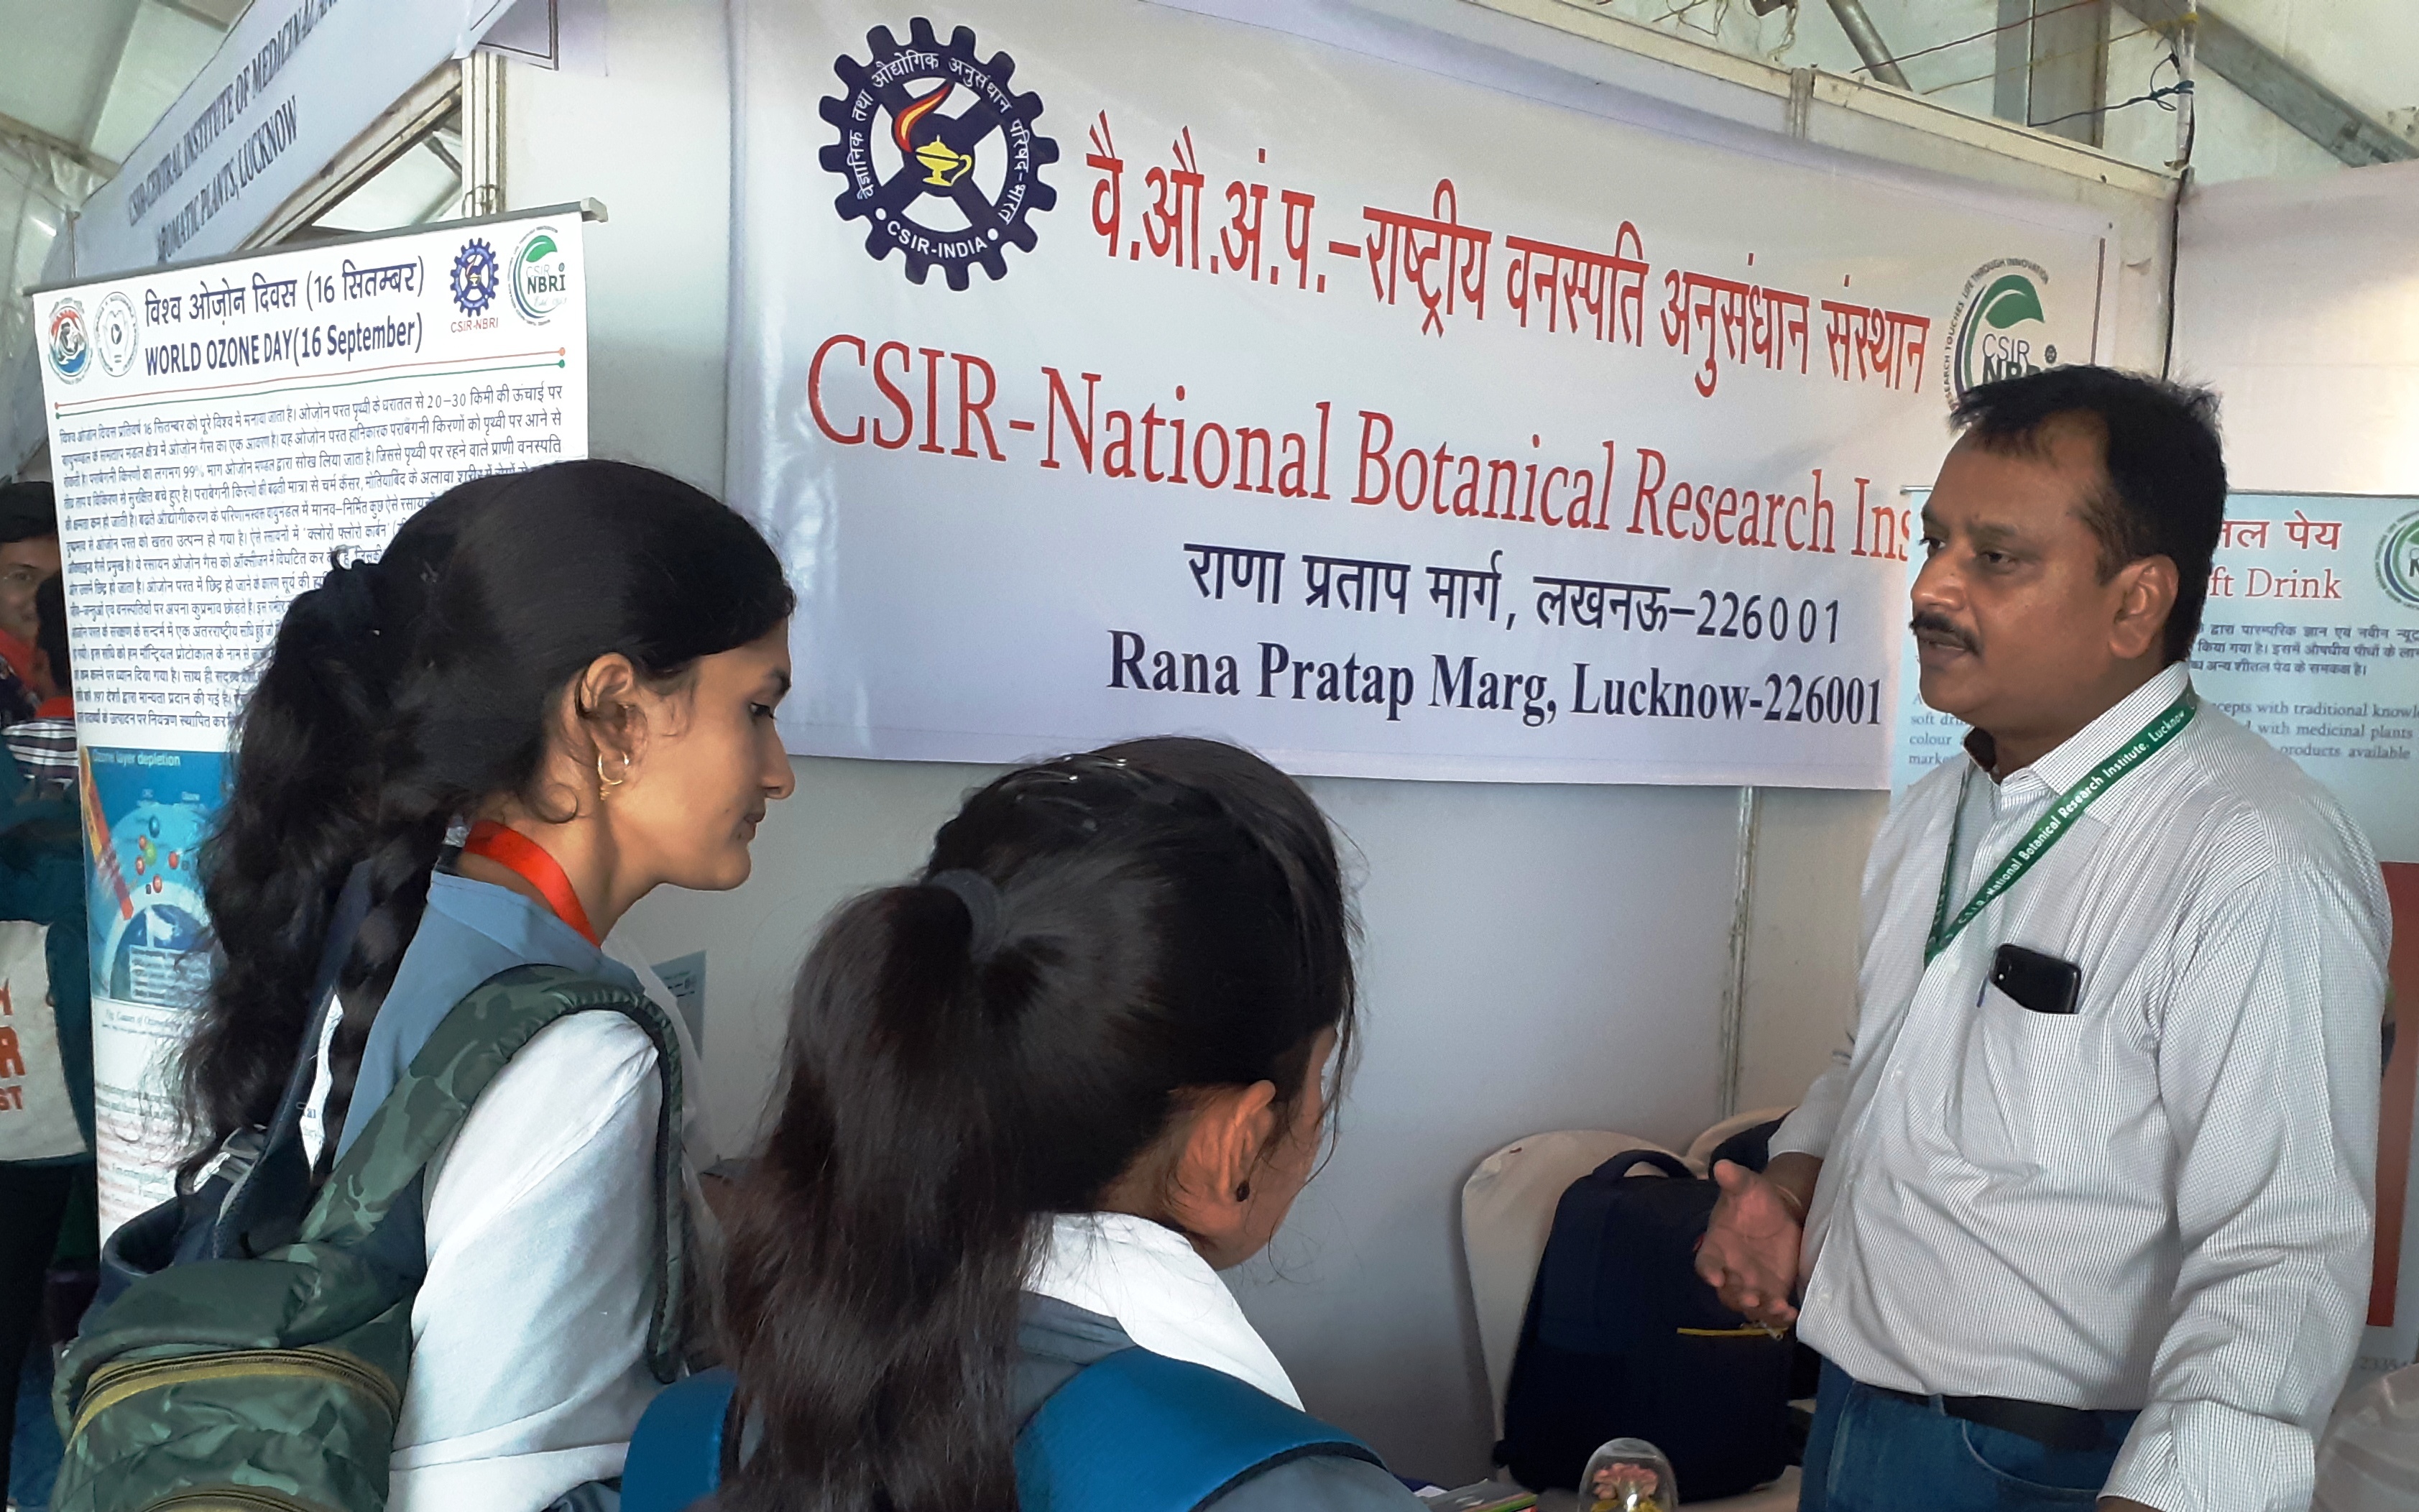 ENVIS-RP-NBRI Celebrated “World Ozone Day-2019” at Bhopal Vigyan Mela-2019